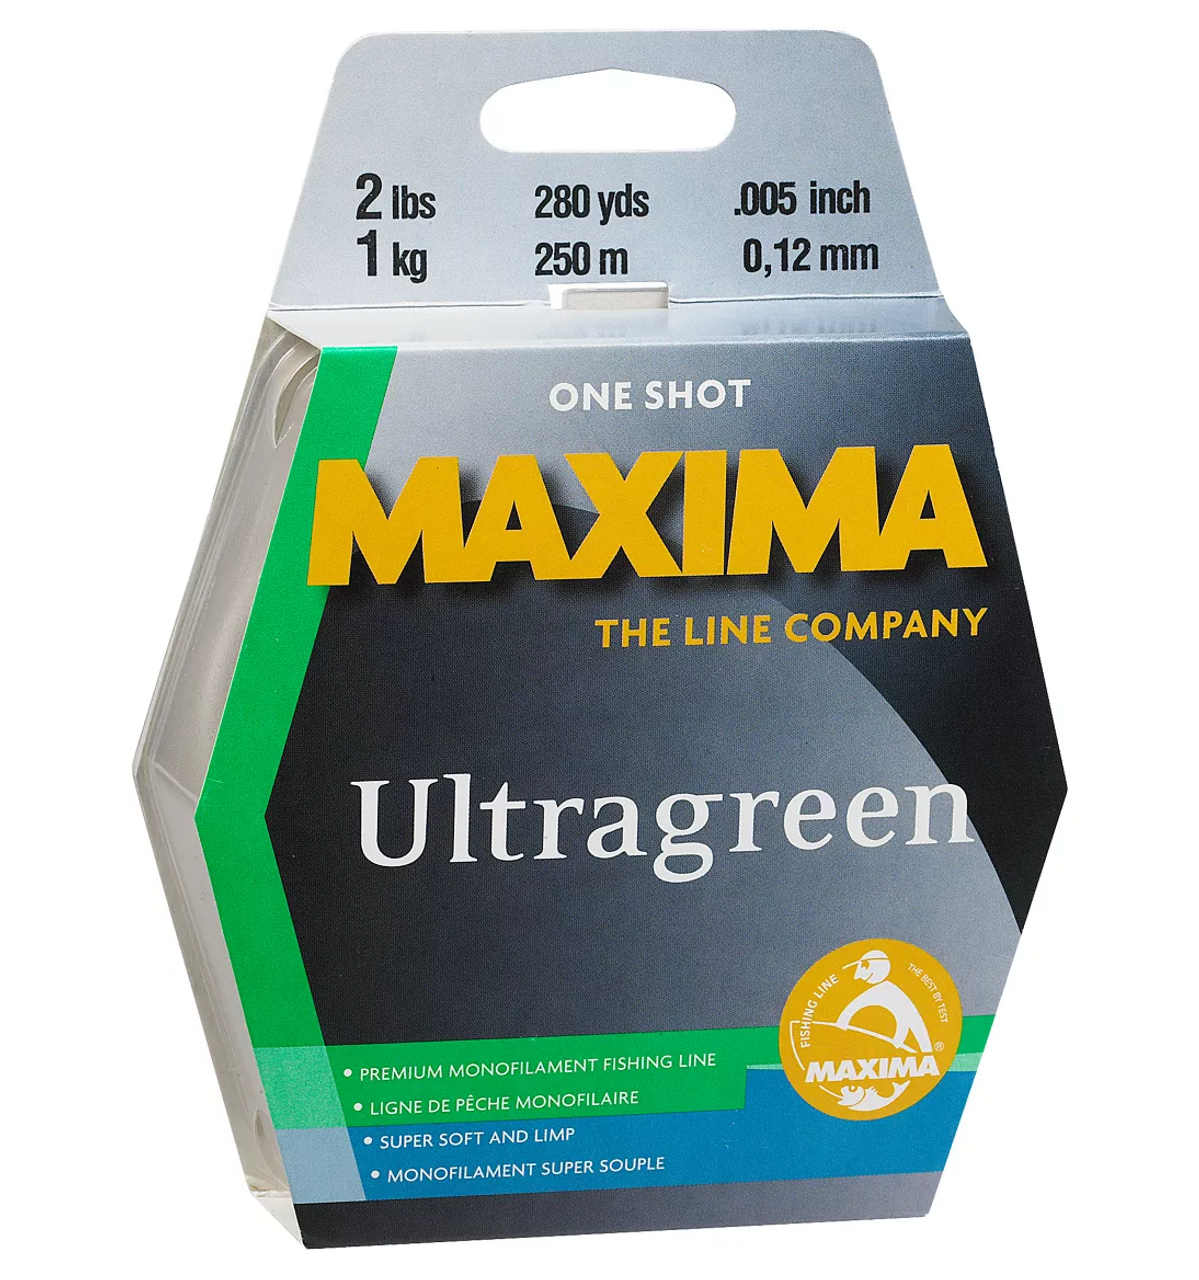 Maxima One Shot Spool Ultragreen 4 lb